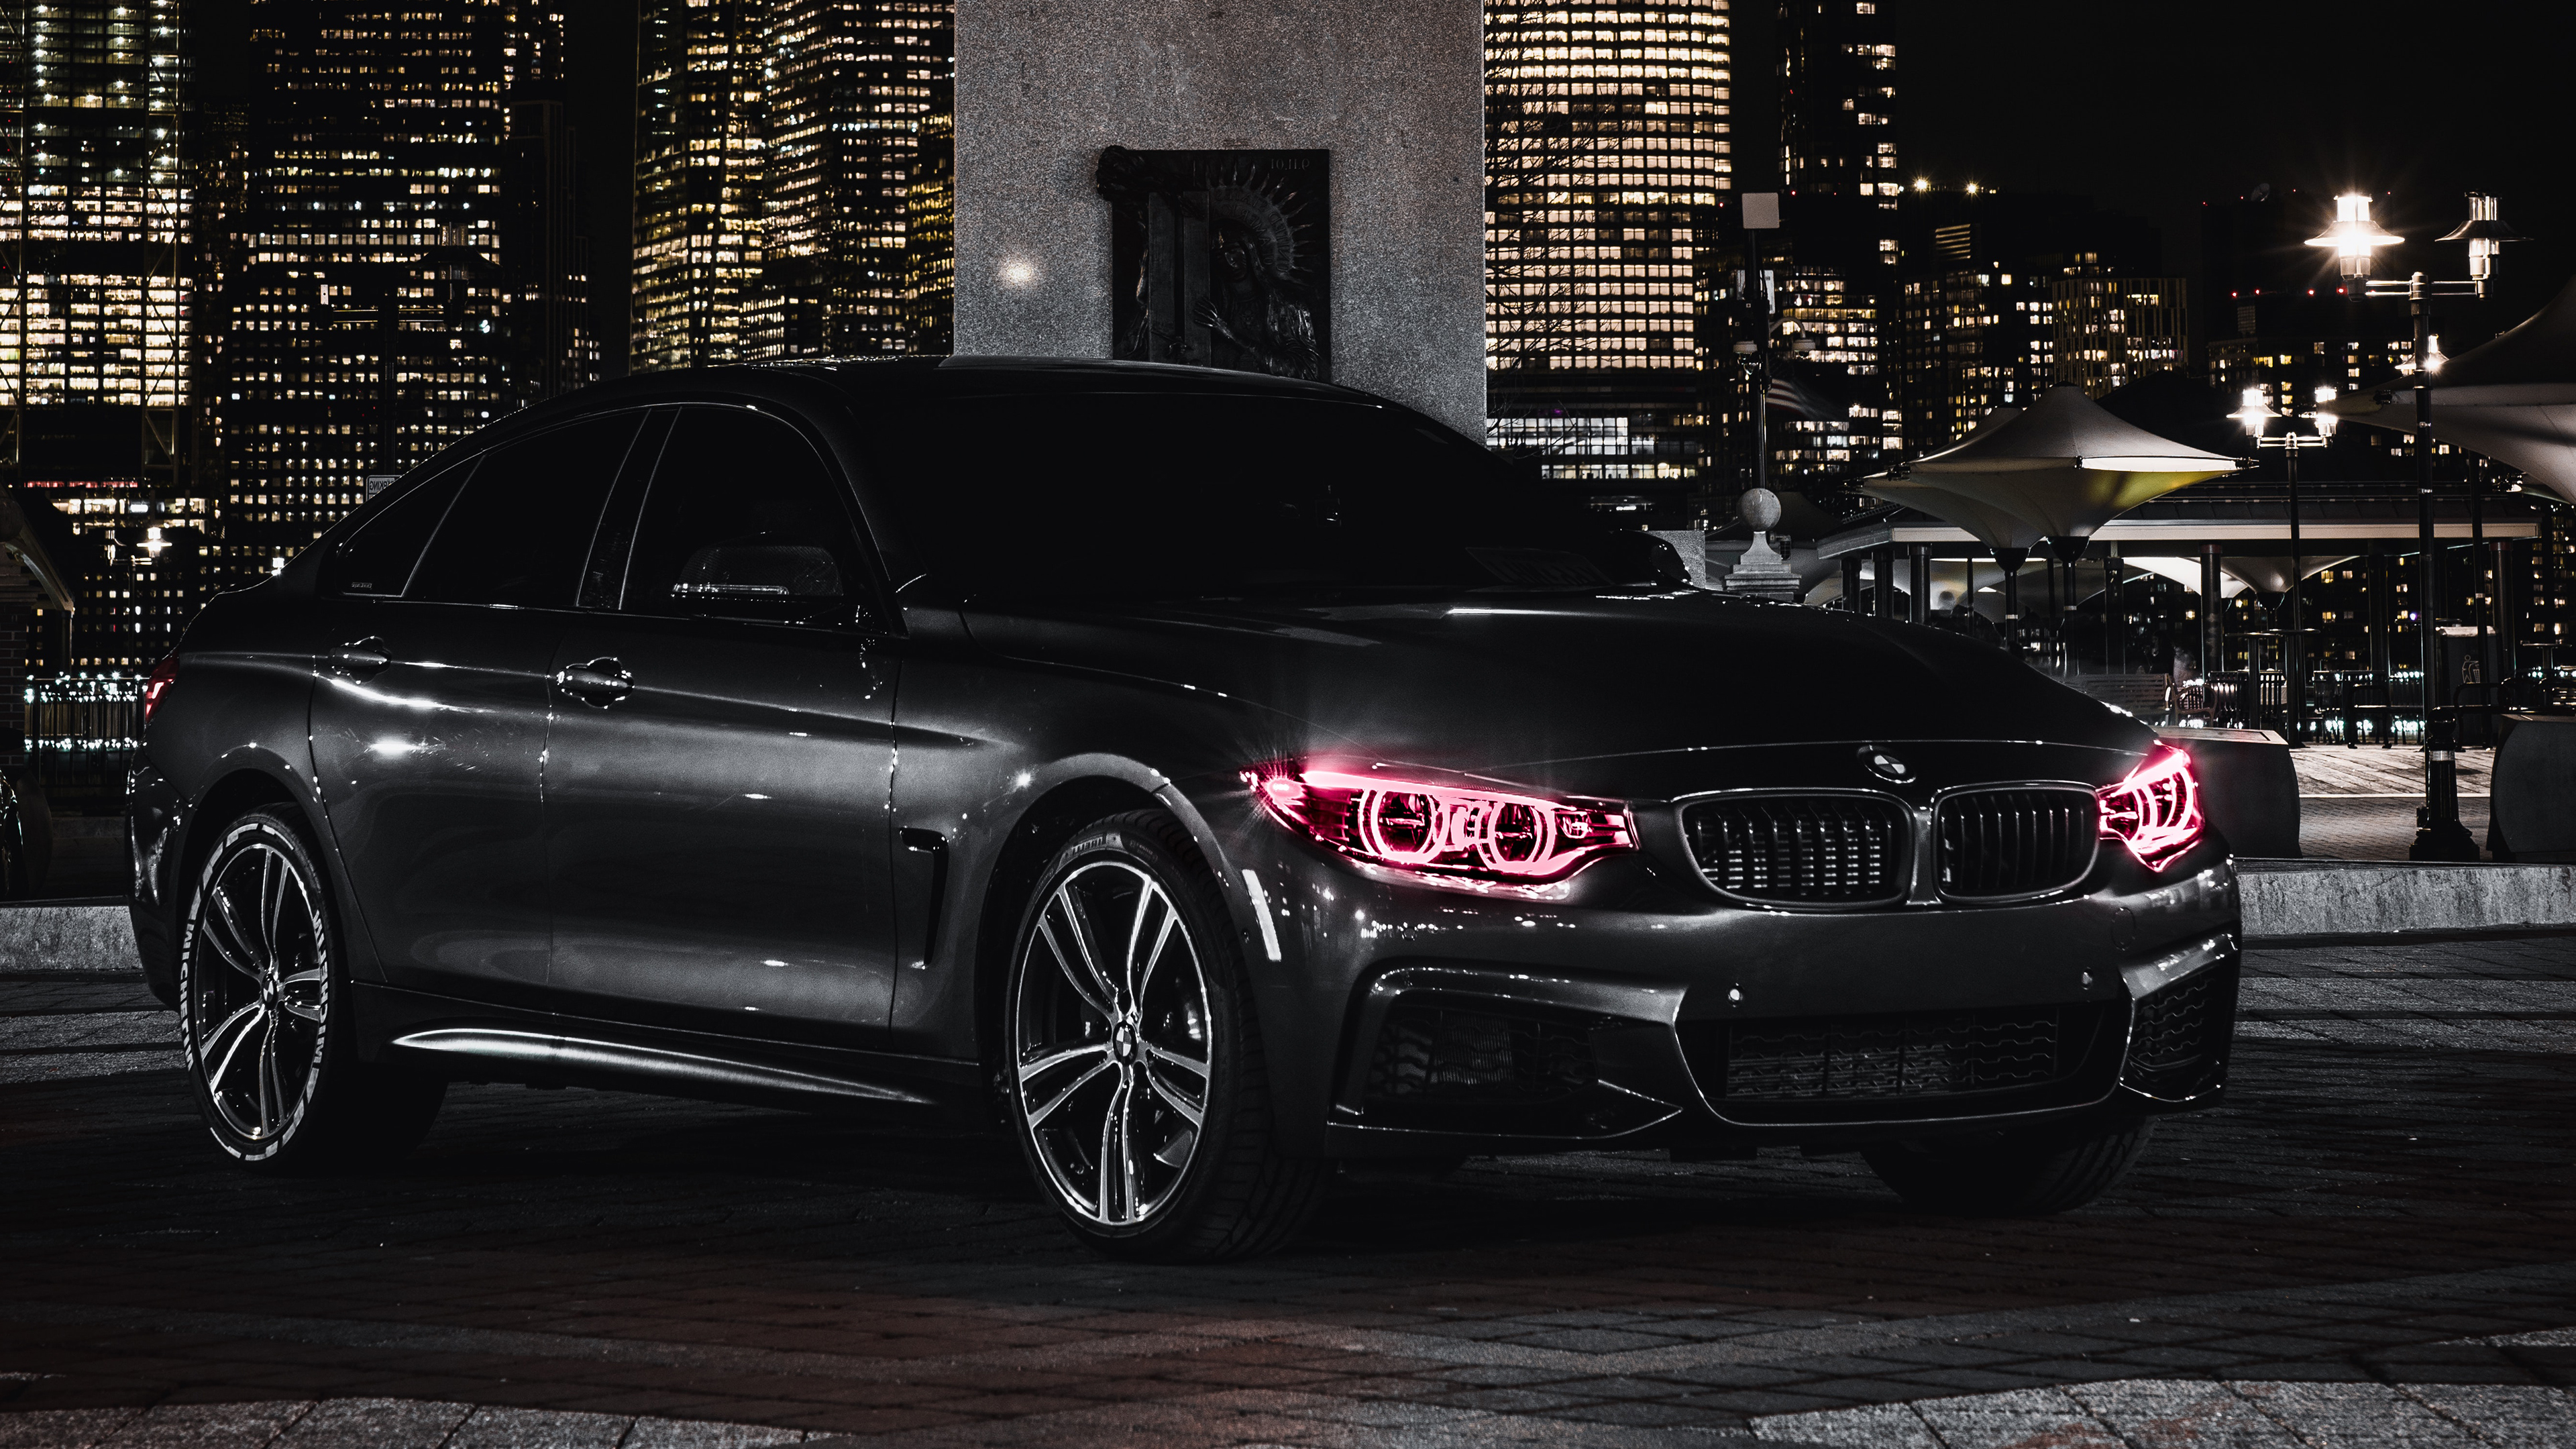 BMW M Black Edition, Angel Eyes, Night, City lights, 4k Free deskk wallpaper, Ultra HD